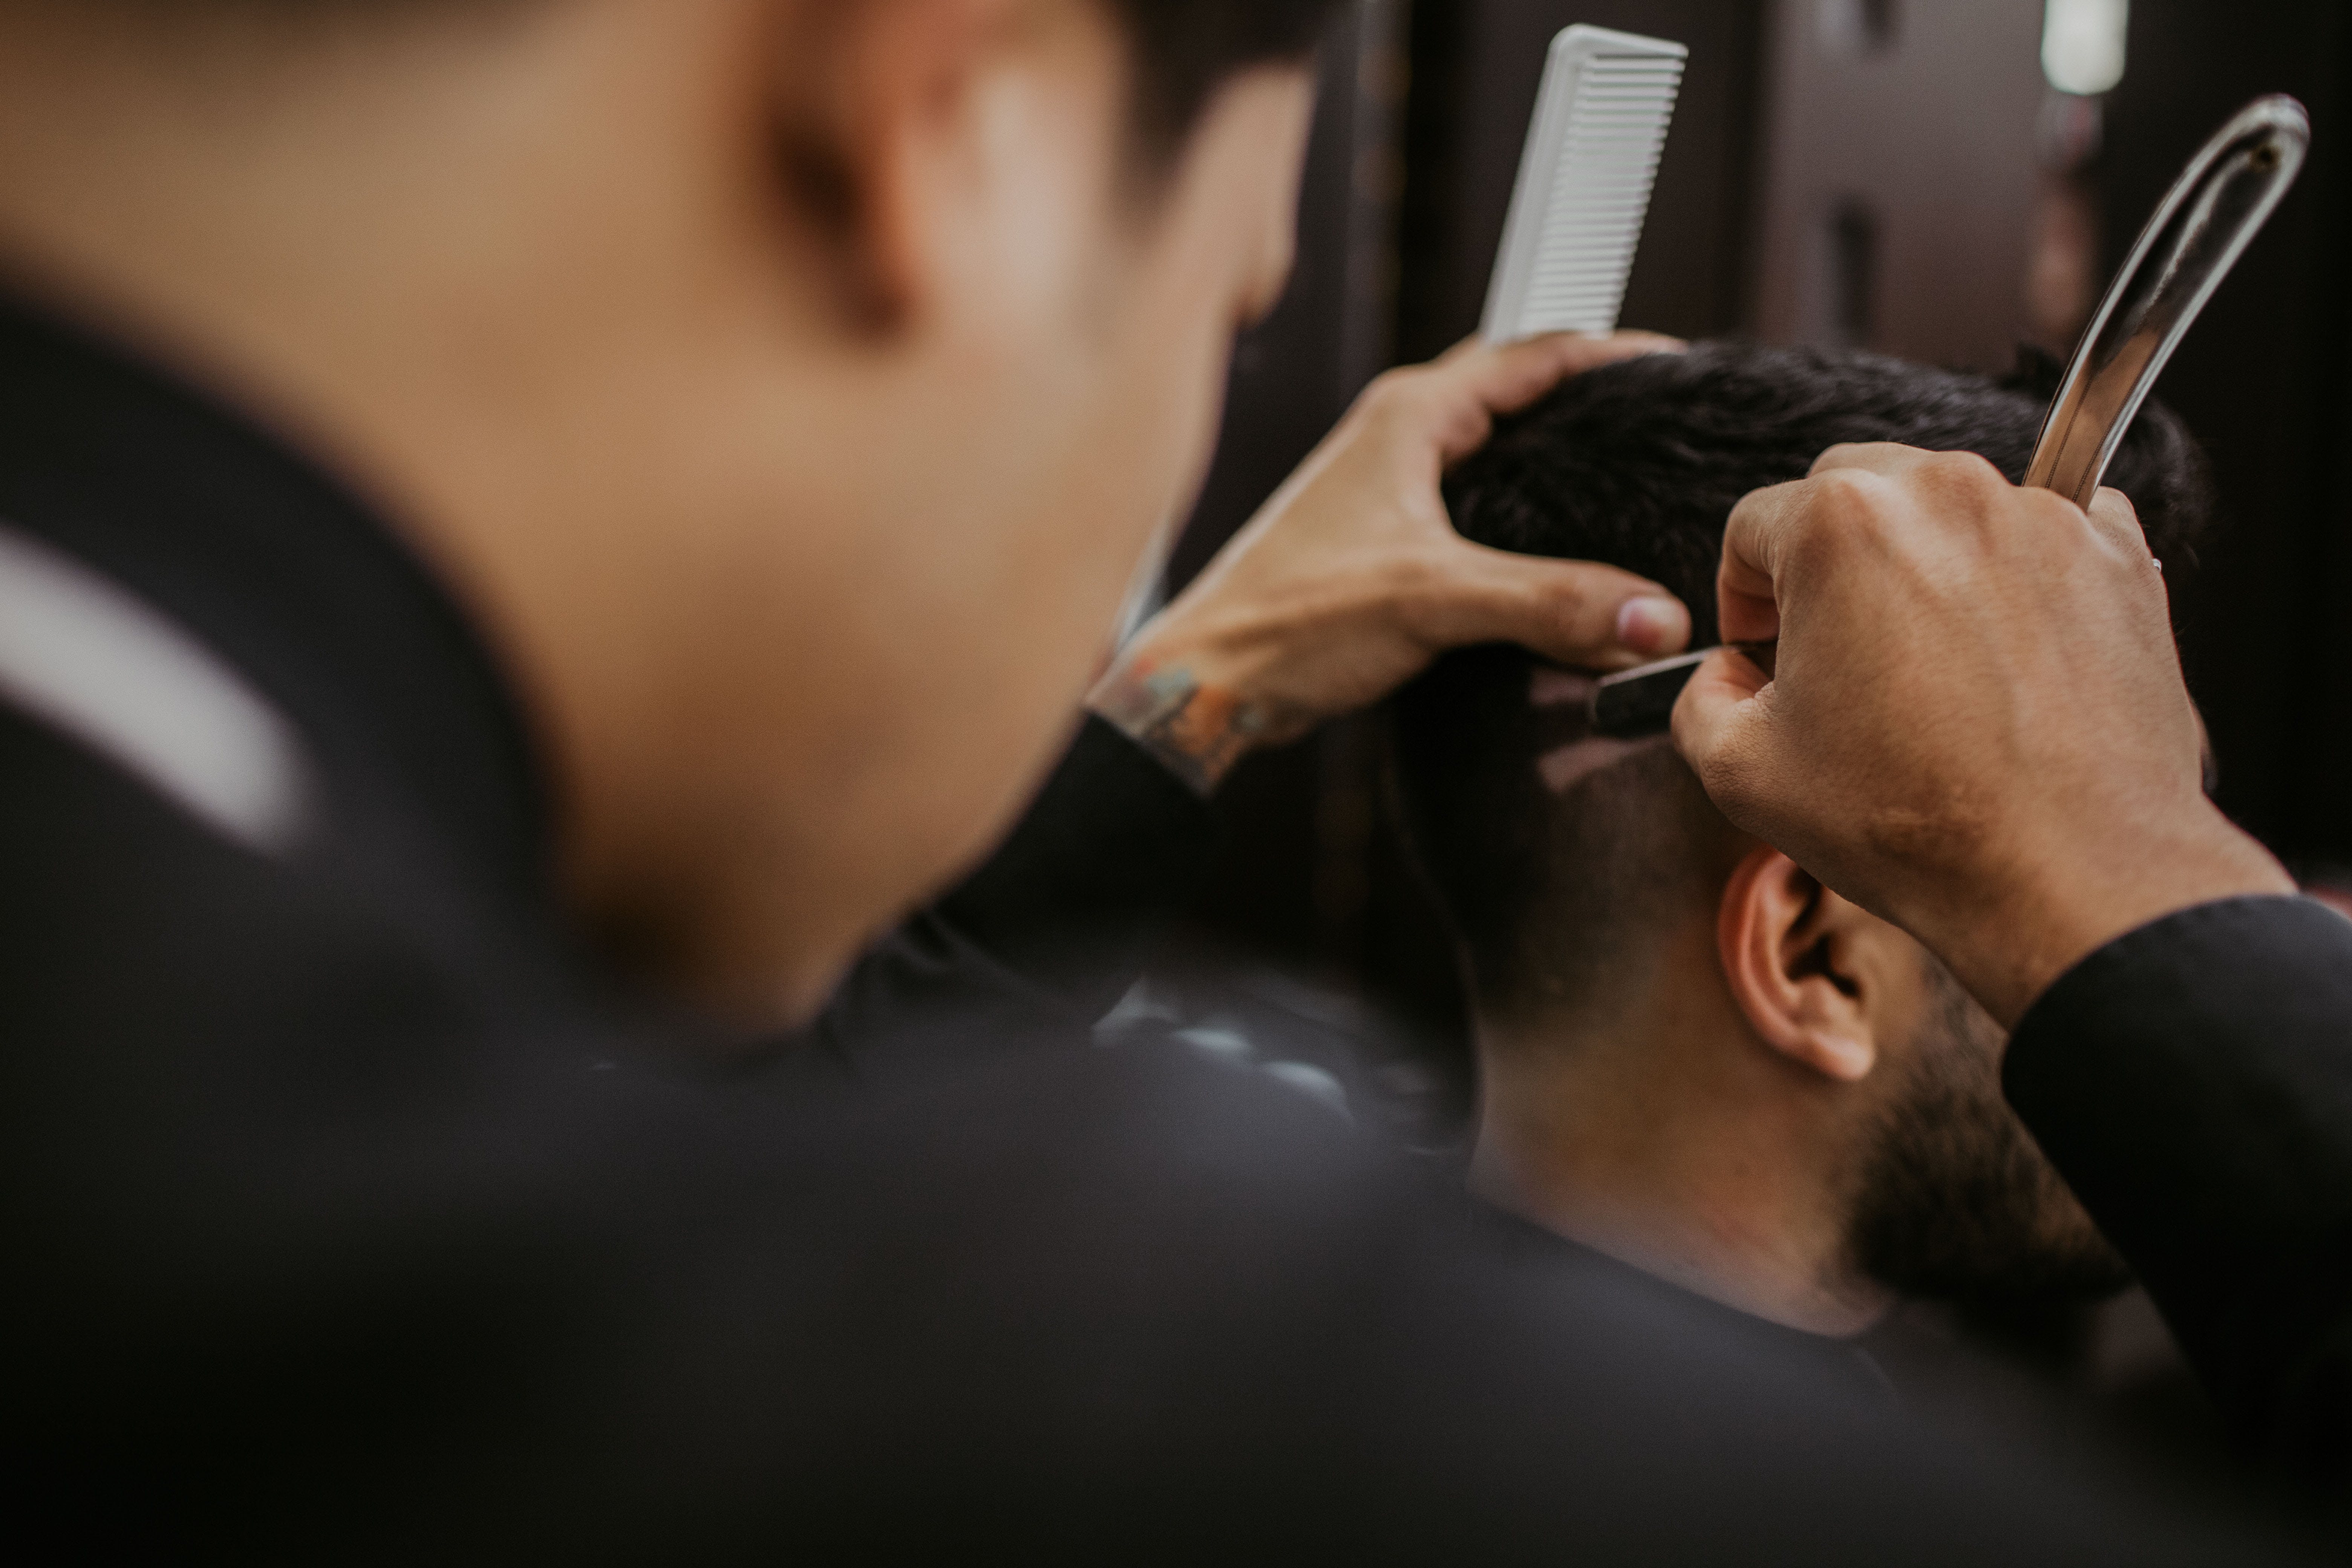 REU’s betydning for frisørbranchen